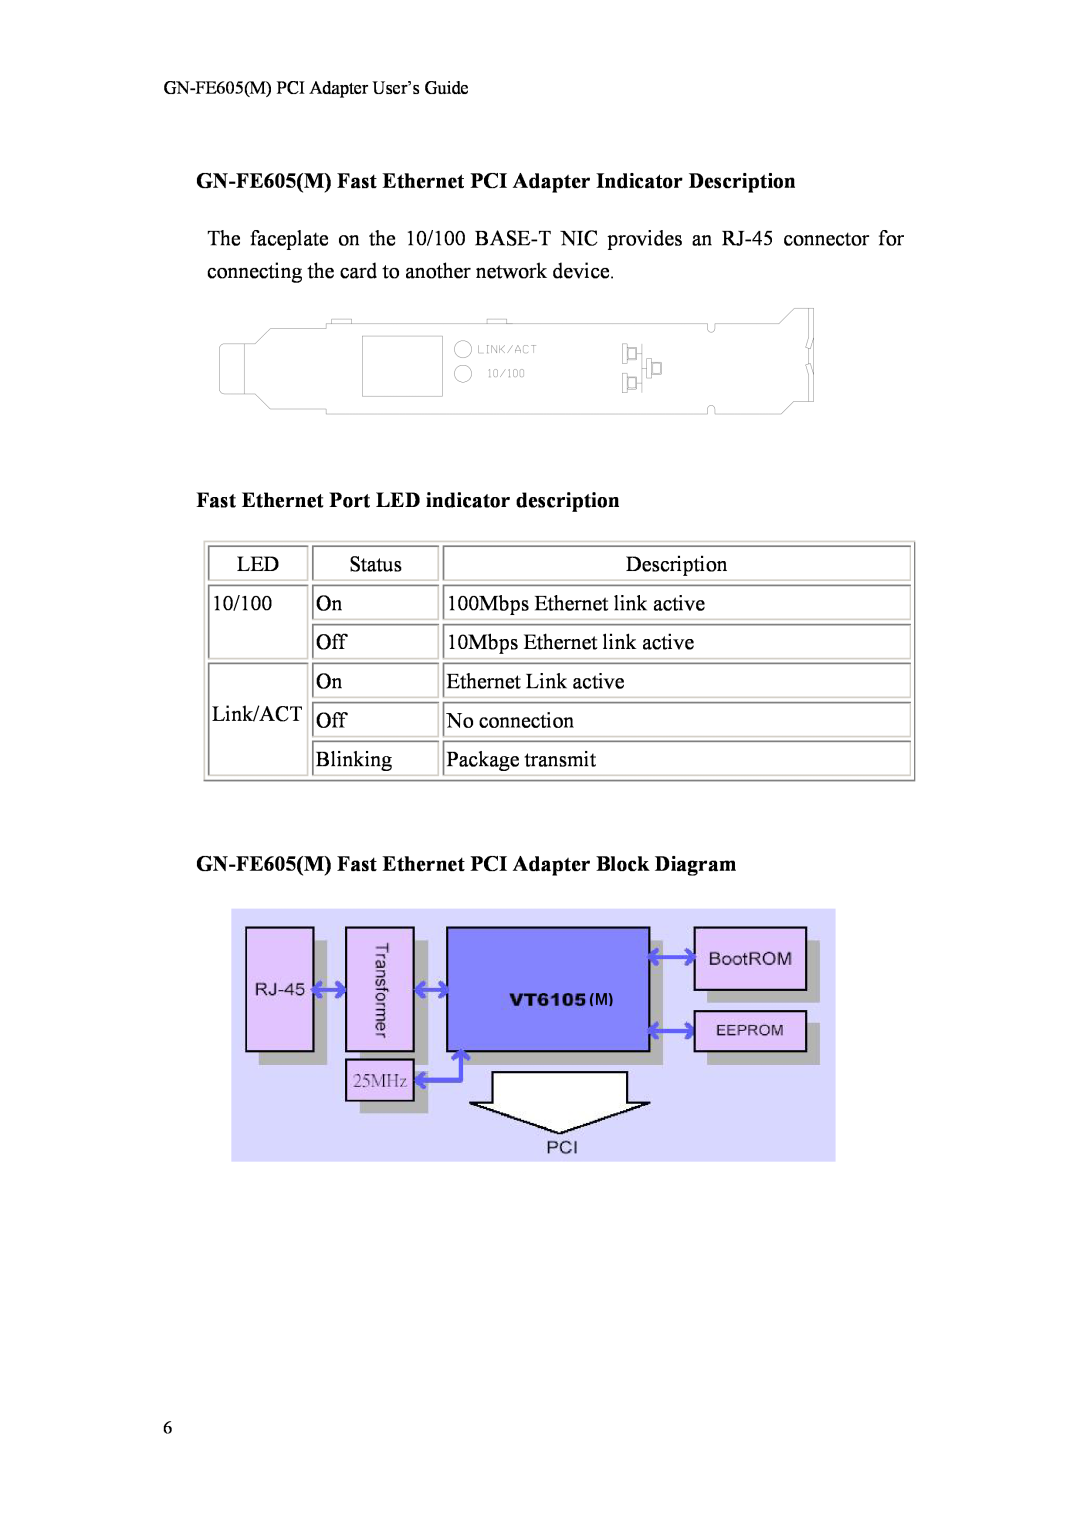 Gigabyte GN-FE605(M) manual GN-FE605M Fast Ethernet PCI Adapter Indicator Description 